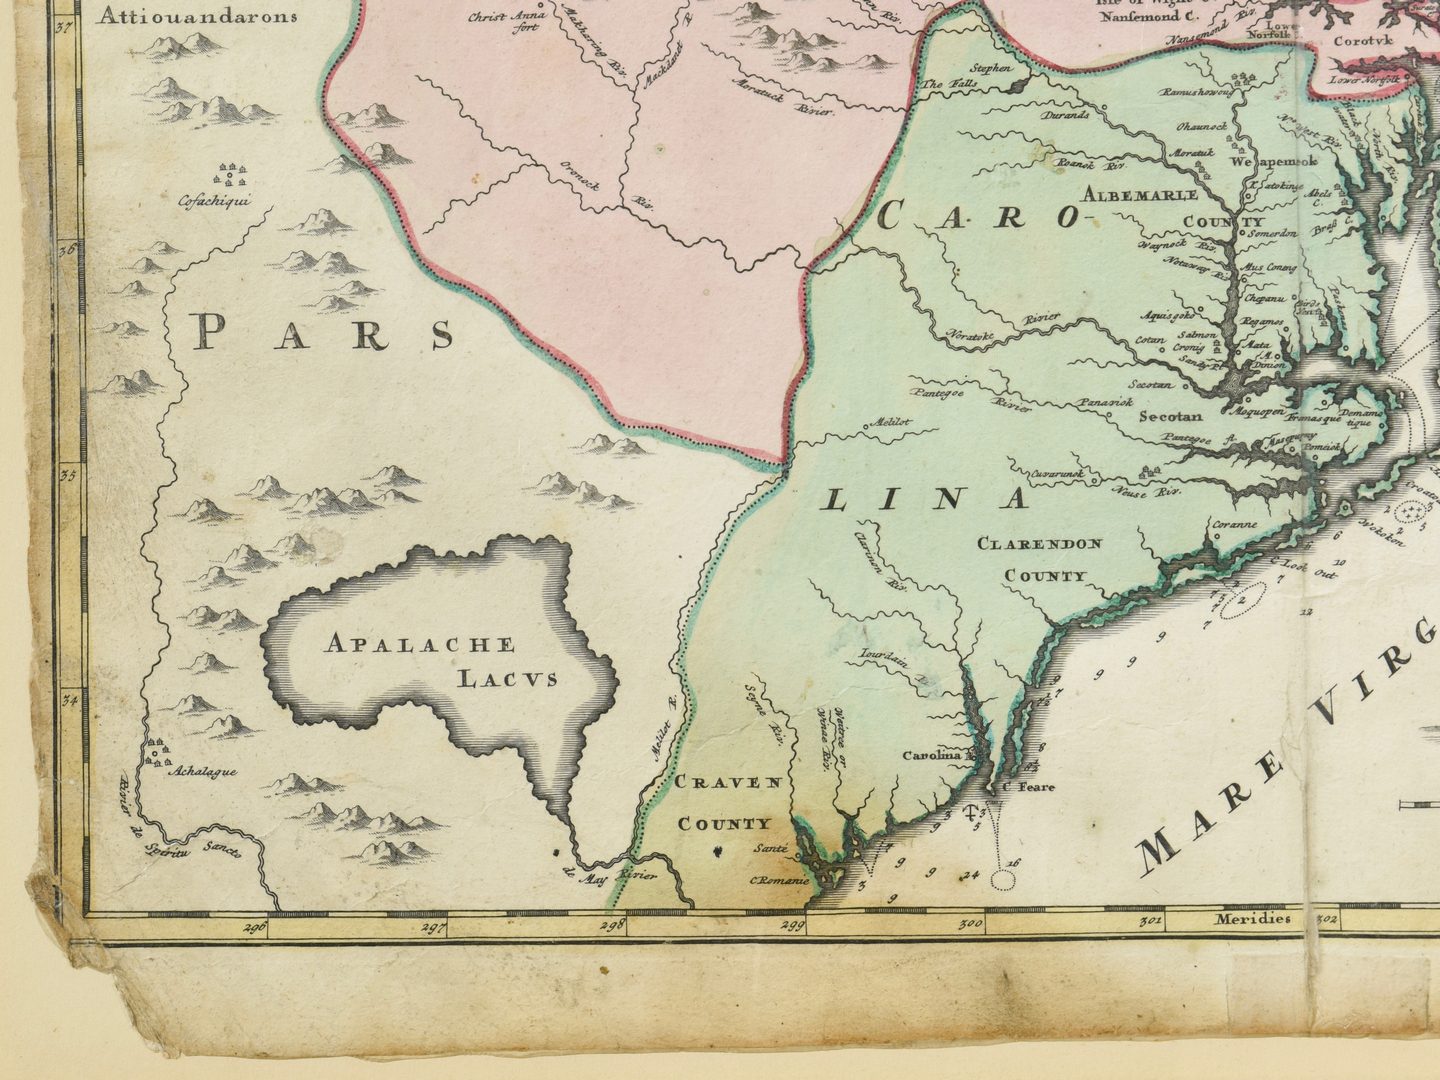 Lot 267: Johann Baptist Homann map of Virginia, Maryland, and Carolina, 1714